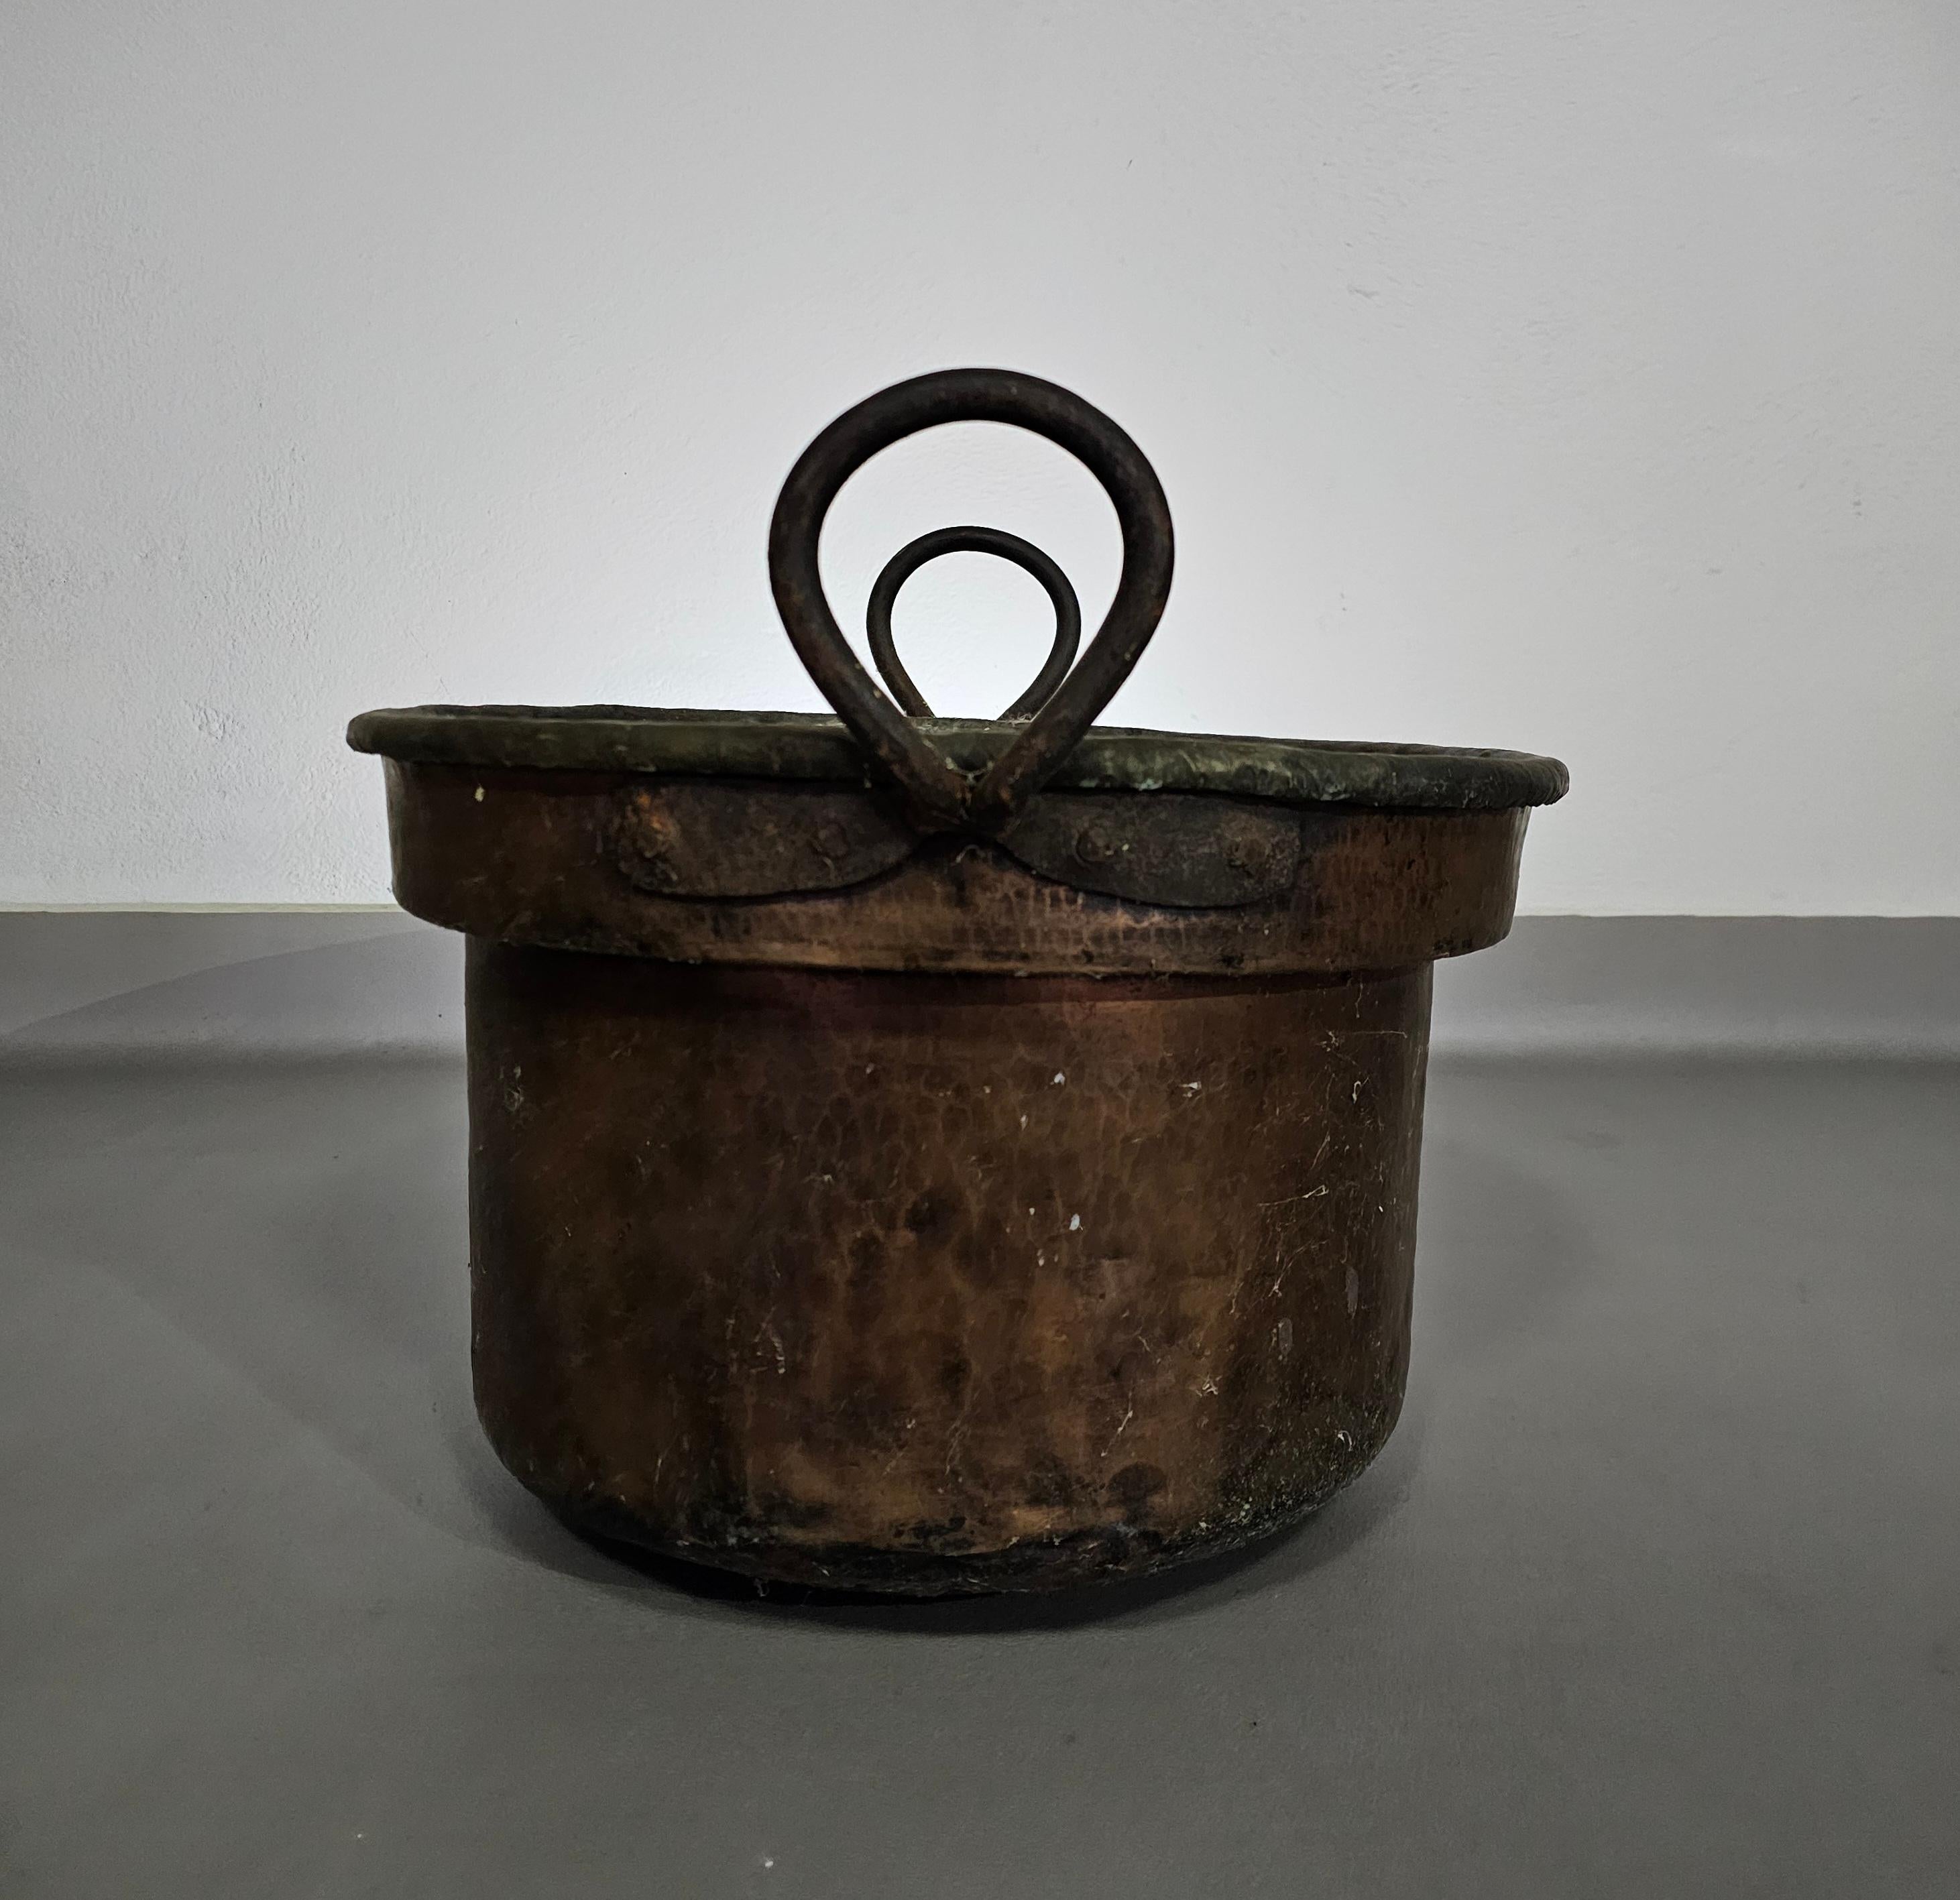  Dutch / Handled Fireplace - Copper / Brass - Bucket  For Sale 2